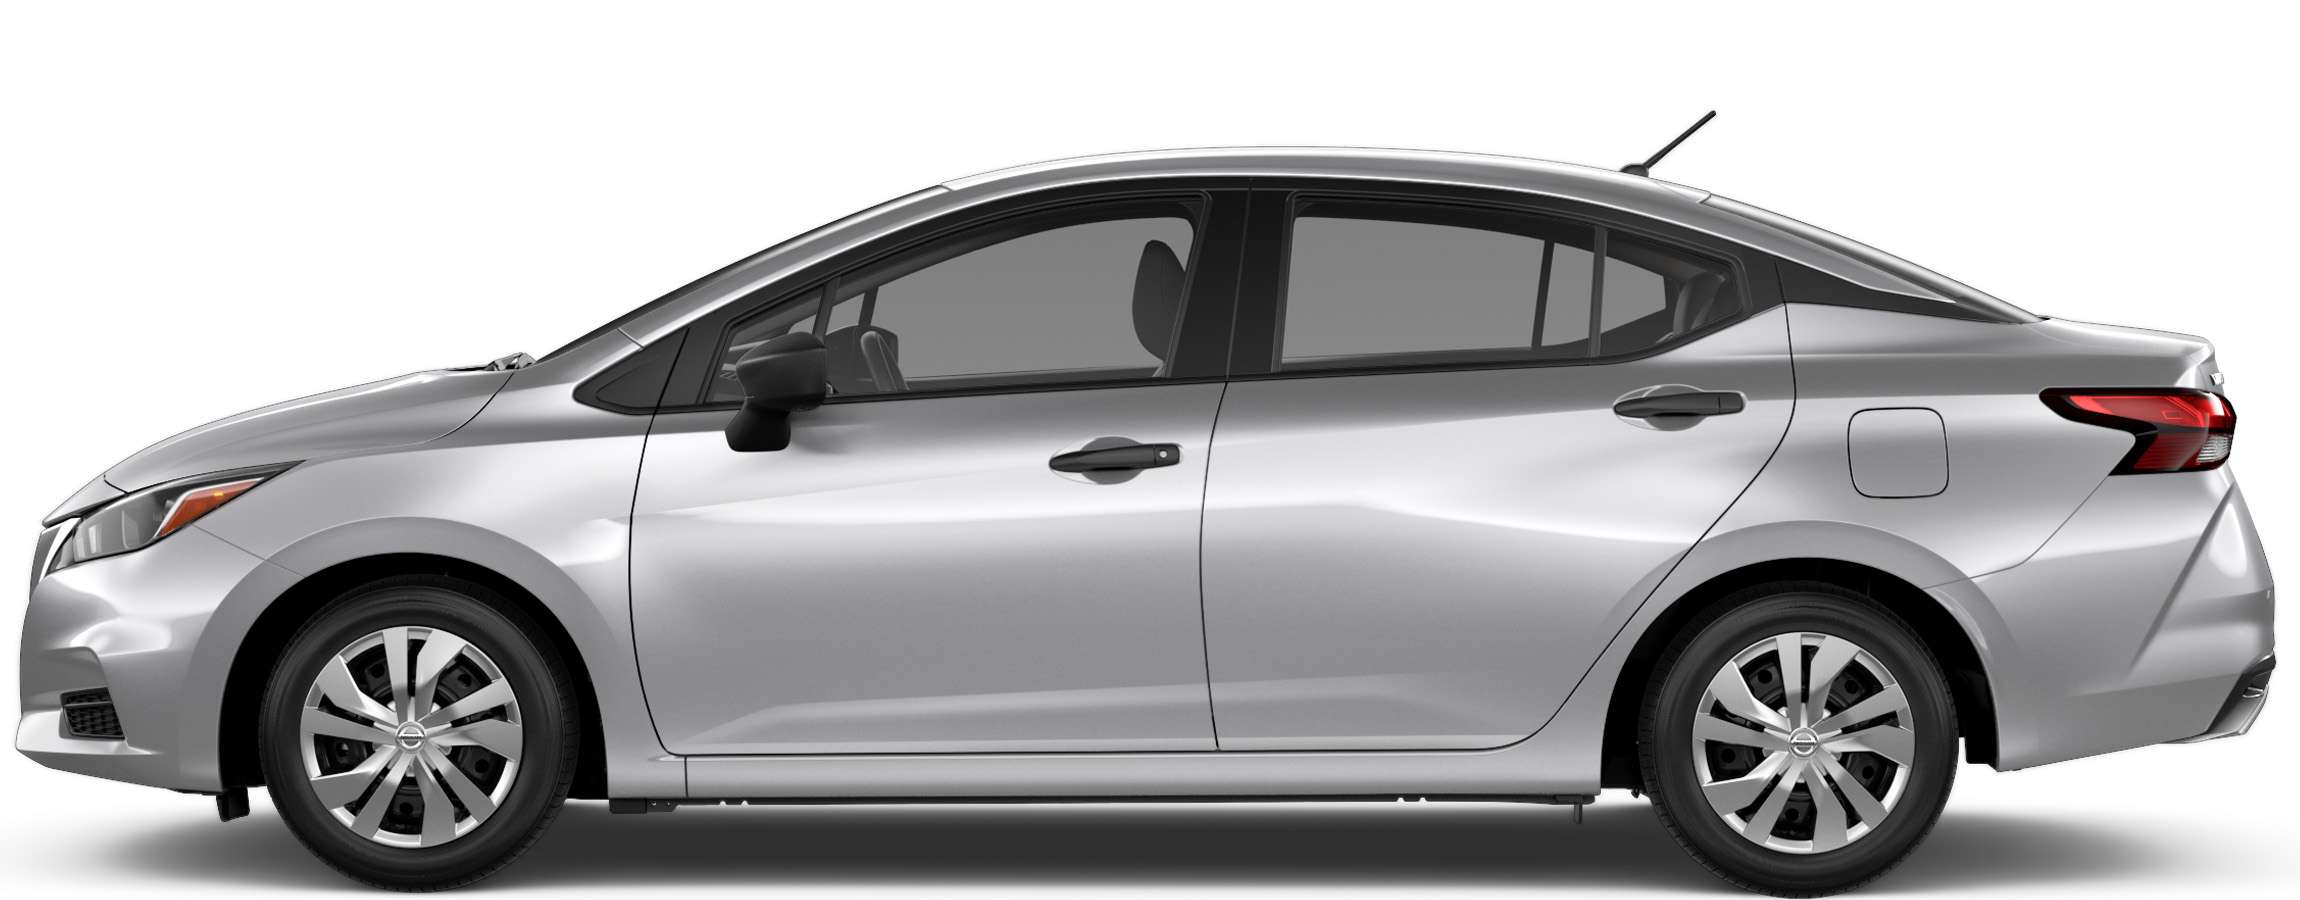 New Nissan Suv Models 2020